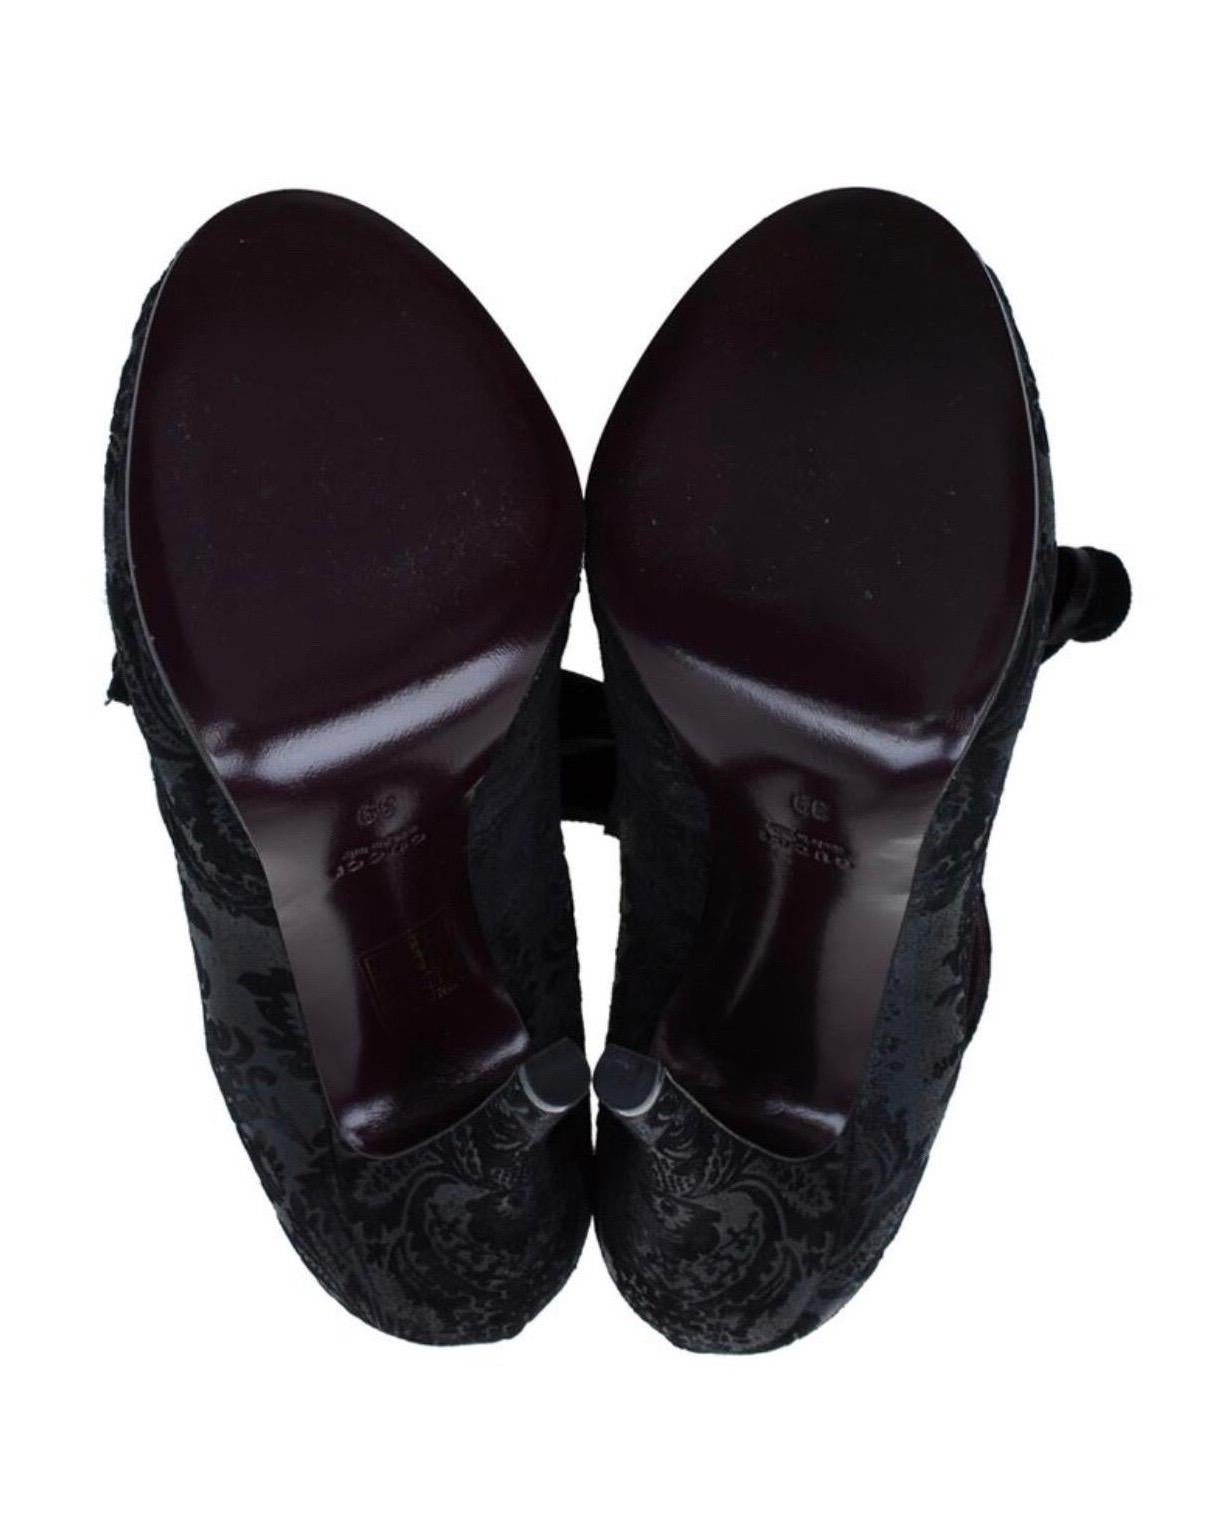 NEW Black Gucci Suede Brocade Pineapple High Heel Sandals Pumps Velvet Bowtie 38 For Sale 7